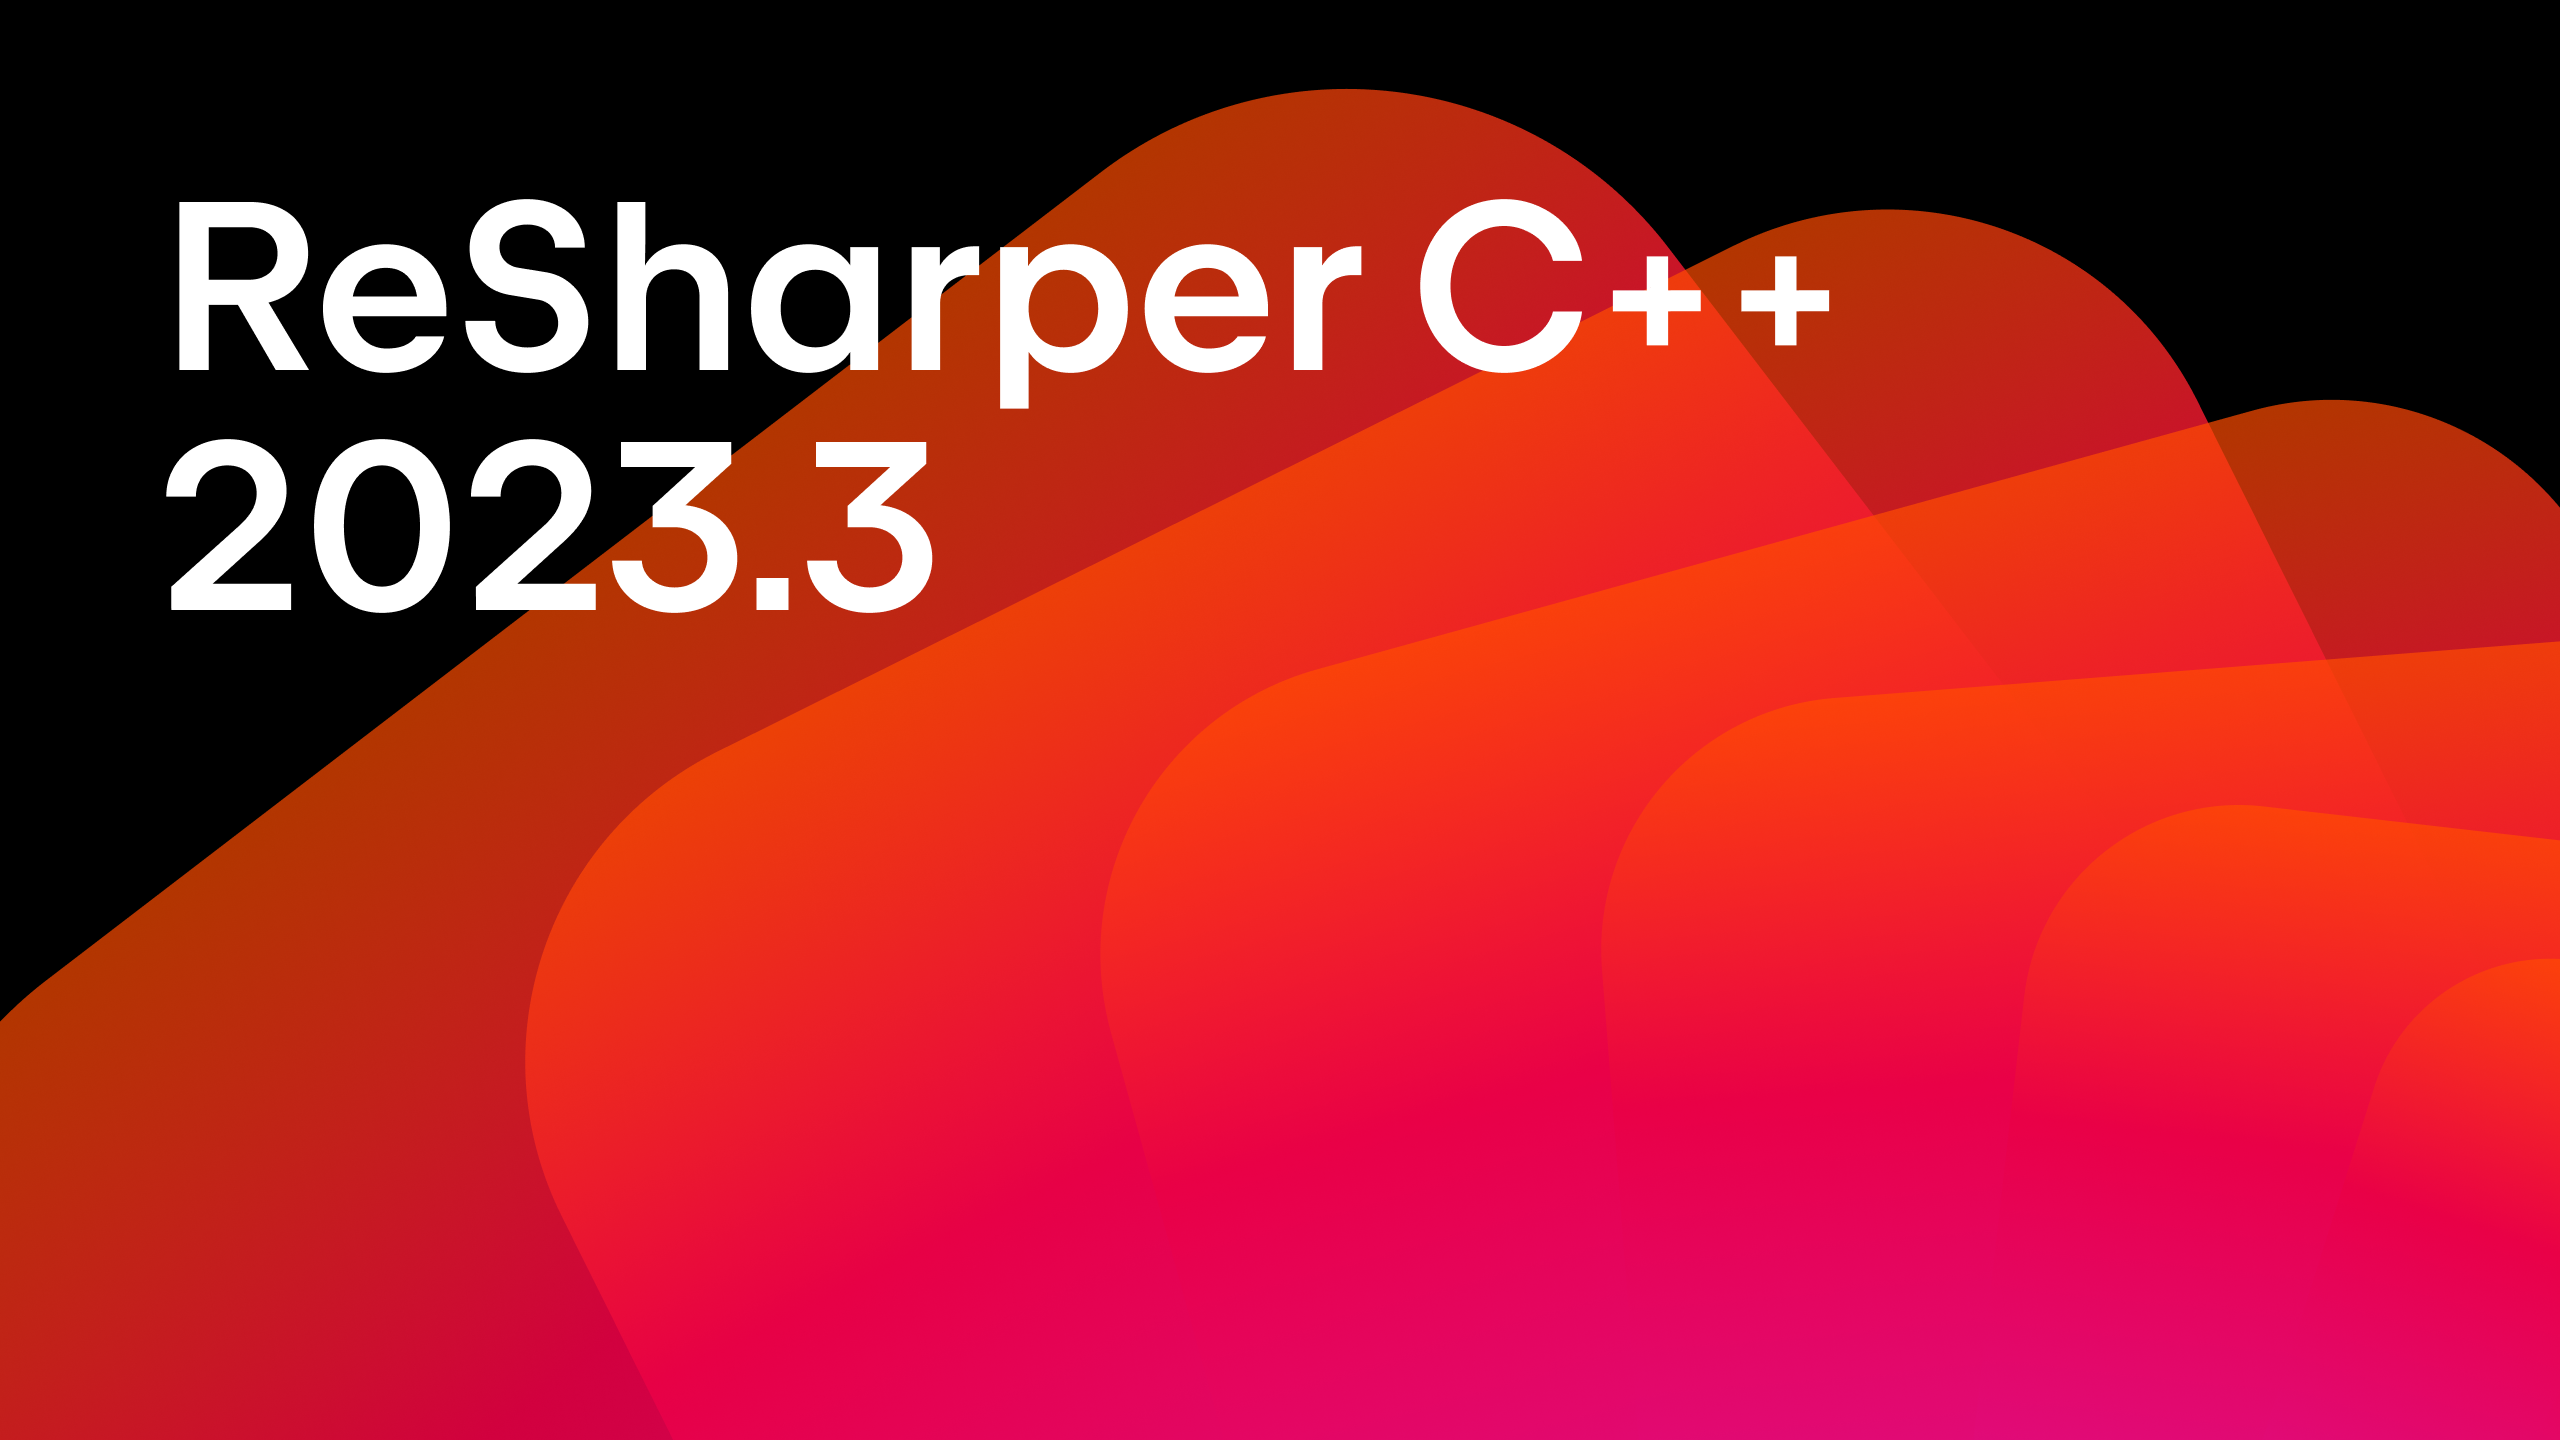 ReSharper C++ 2023.3